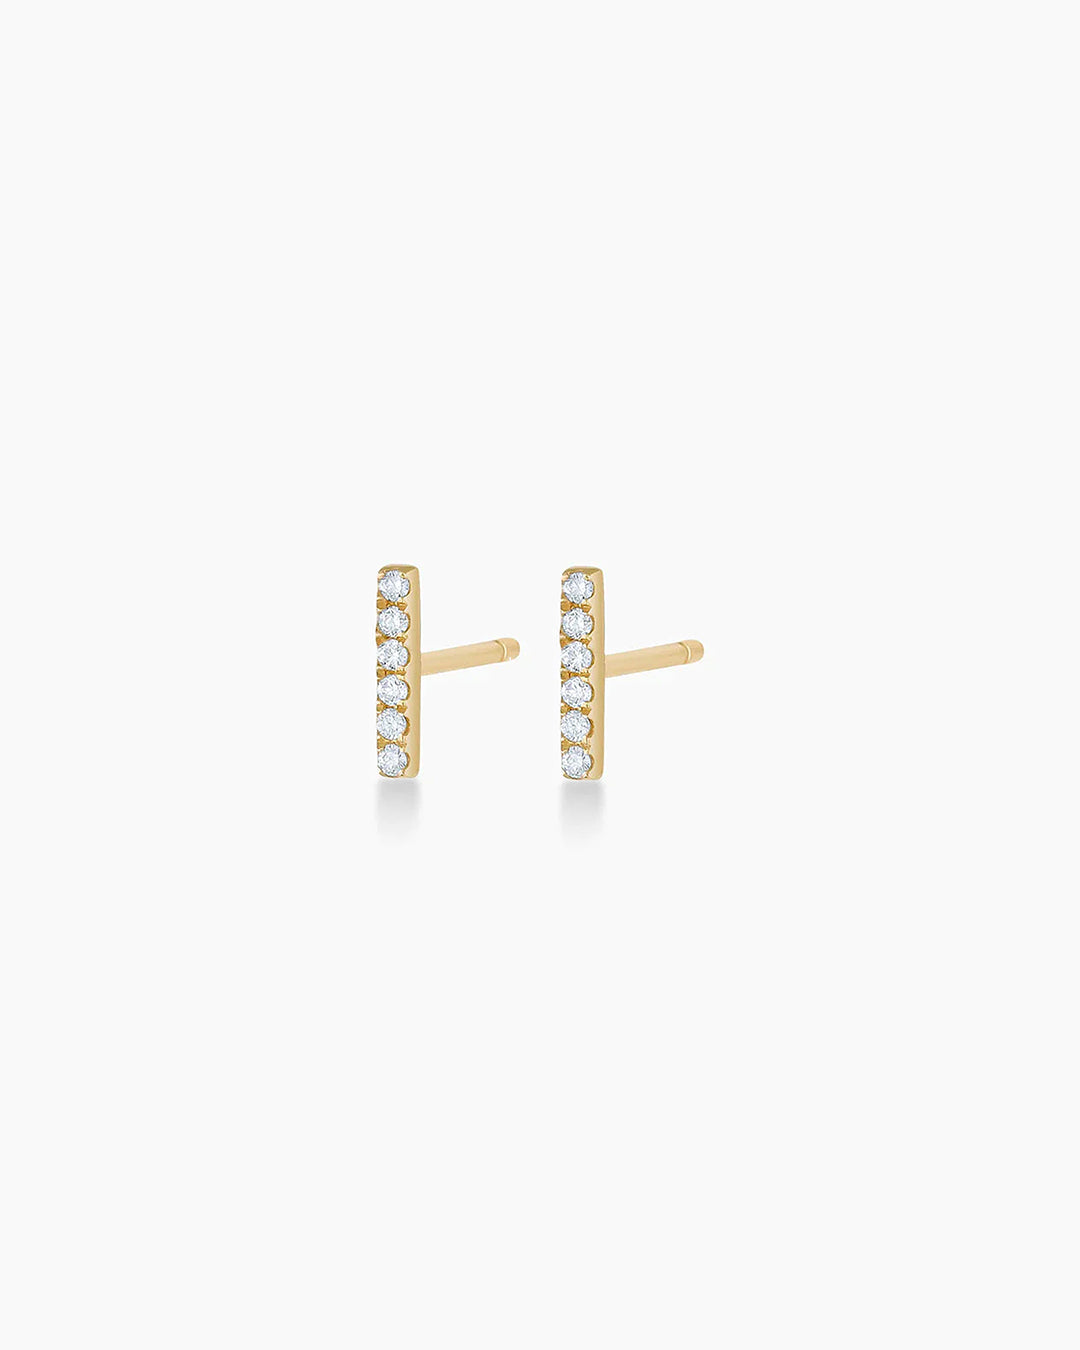 Gold Bar Earrings with Pavé Diamonds | gorjana